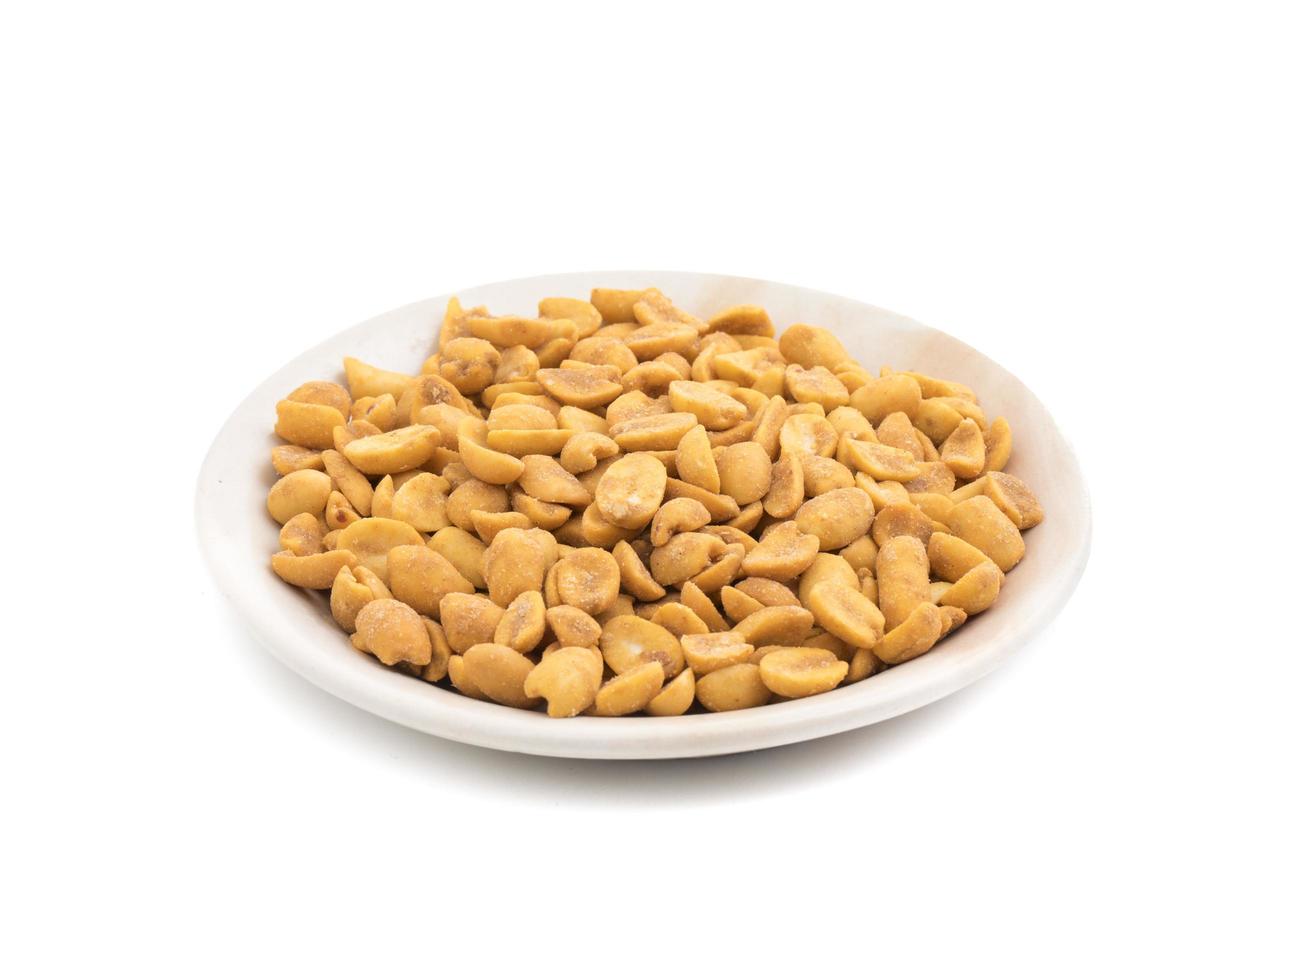 Peanut snack in a white bowl photo